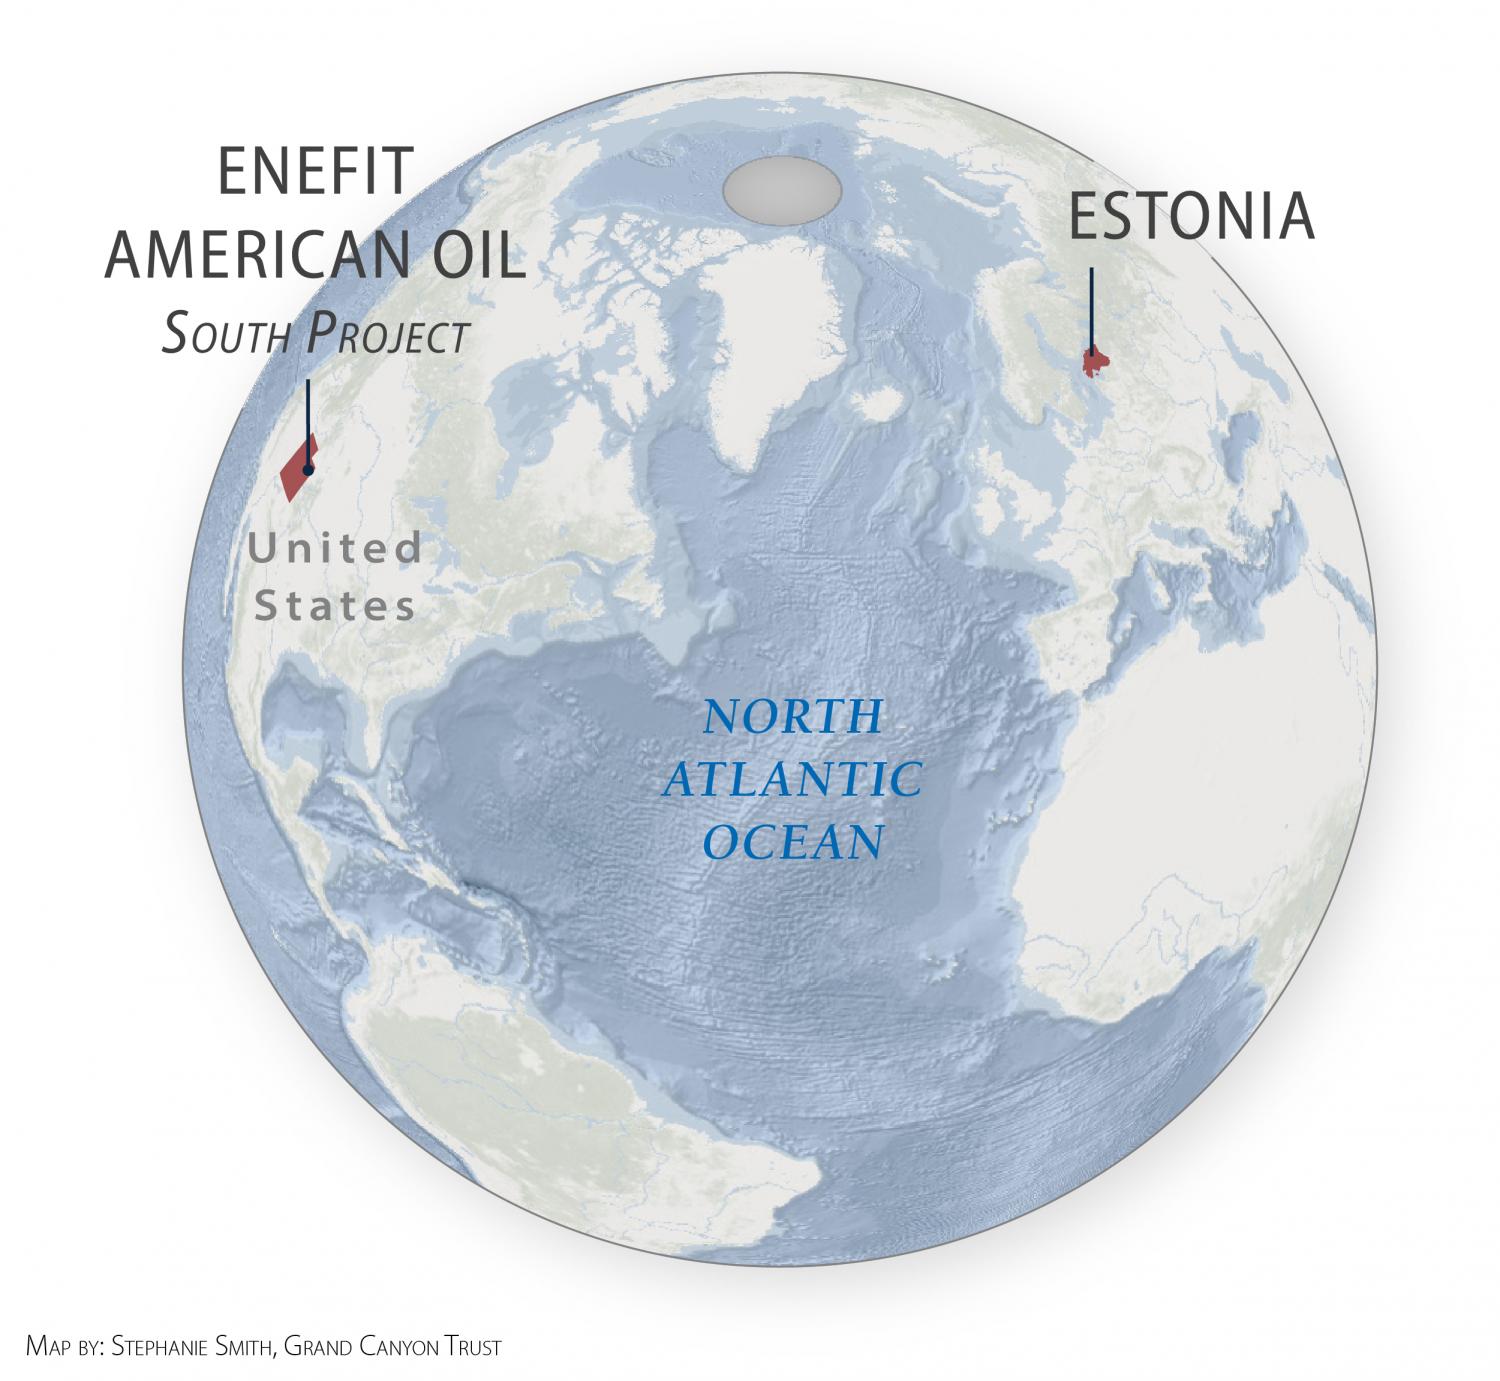 Map of Enefit's Estonia location.